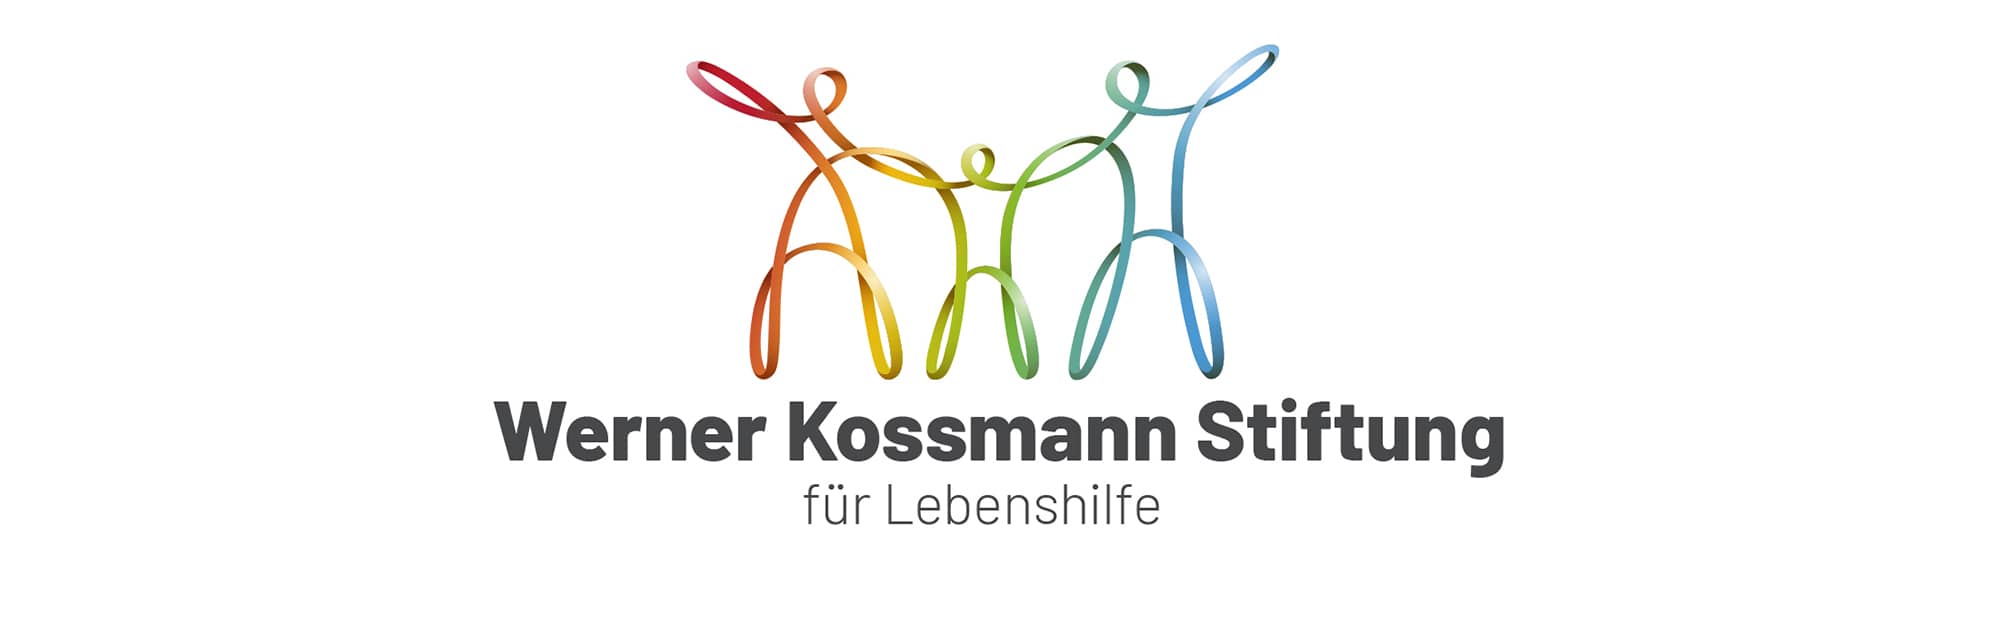 (c) Werner-kossmann-stiftung.de